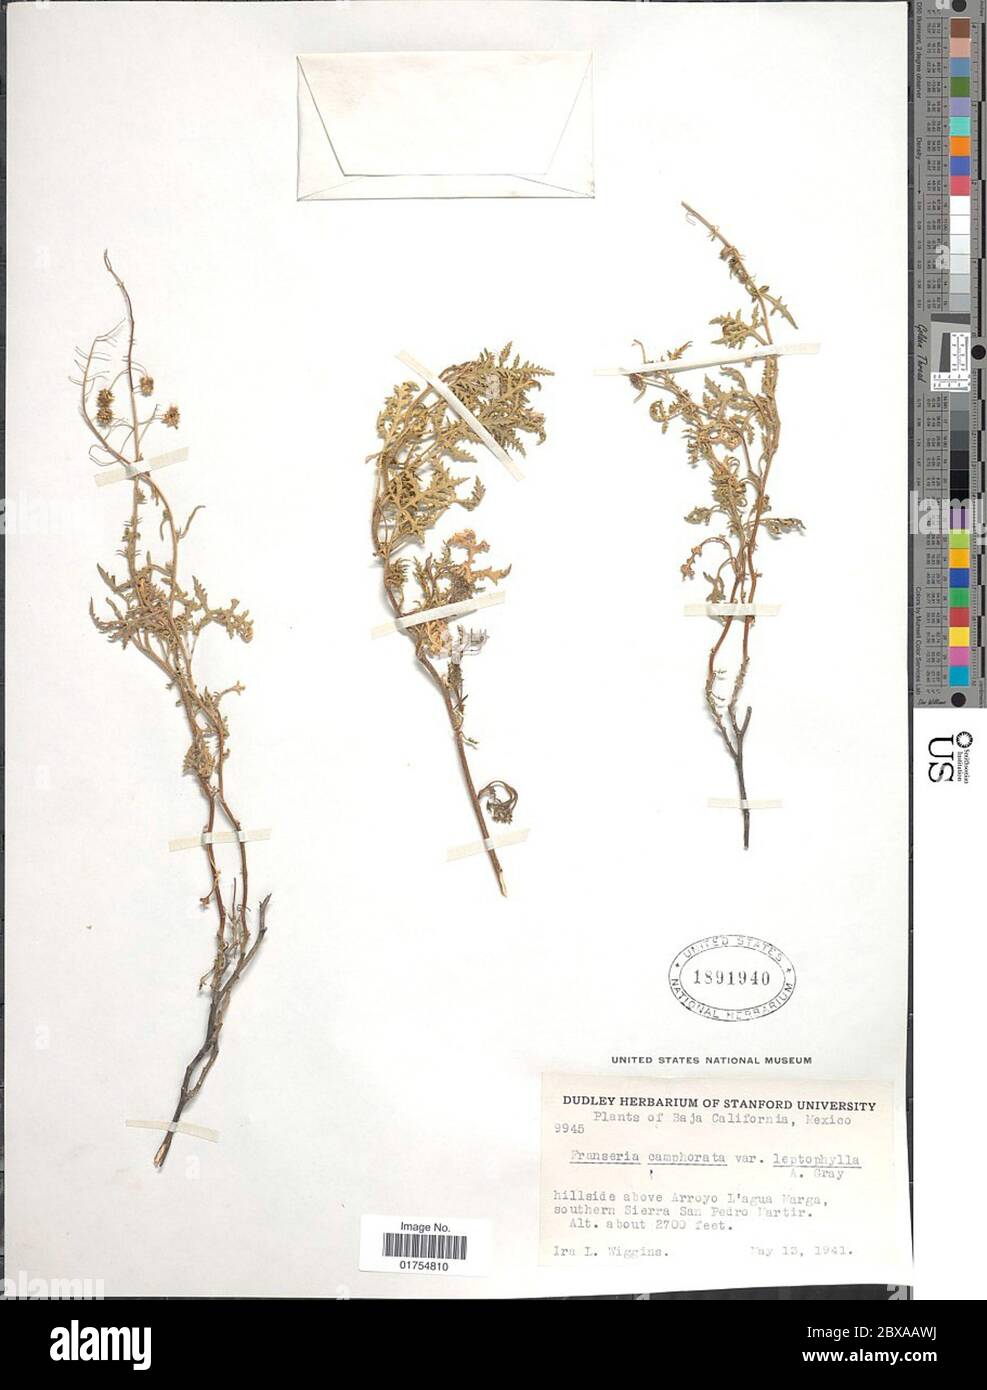 Franseria camphorata var leptophylla A Gray Franseria camphorata var leptophylla A Gray. Stock Photo